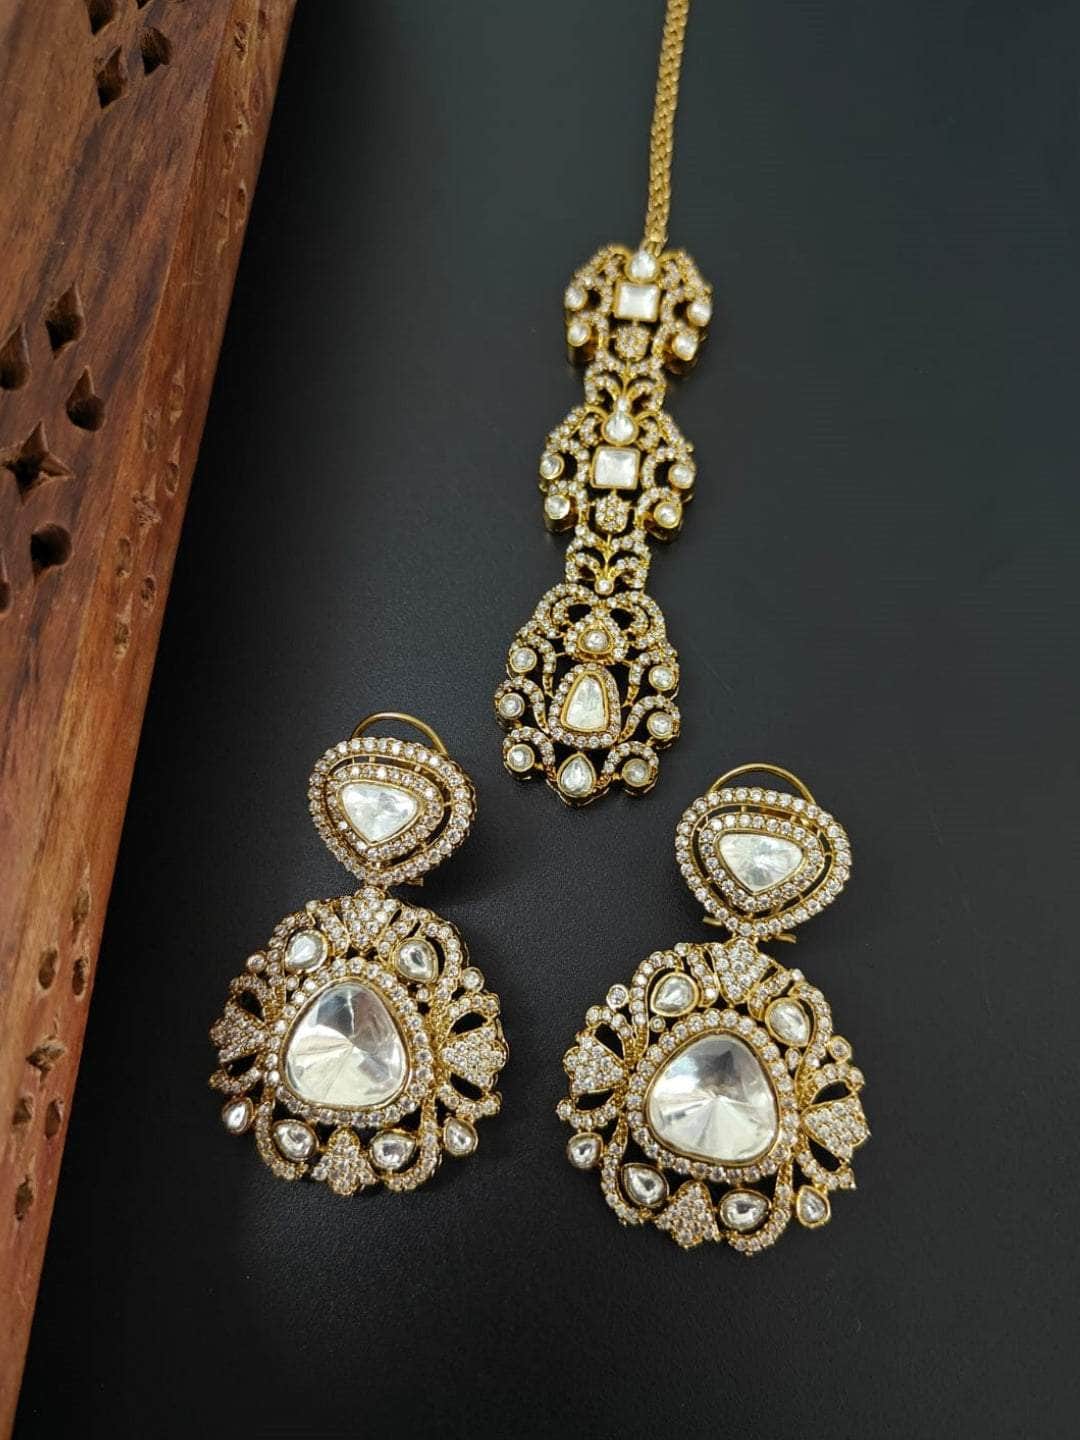 Ishhaara Parineeti Chopra Engagement Look Inspired Kundan Jhumka Earrings Set with Mang Tikka